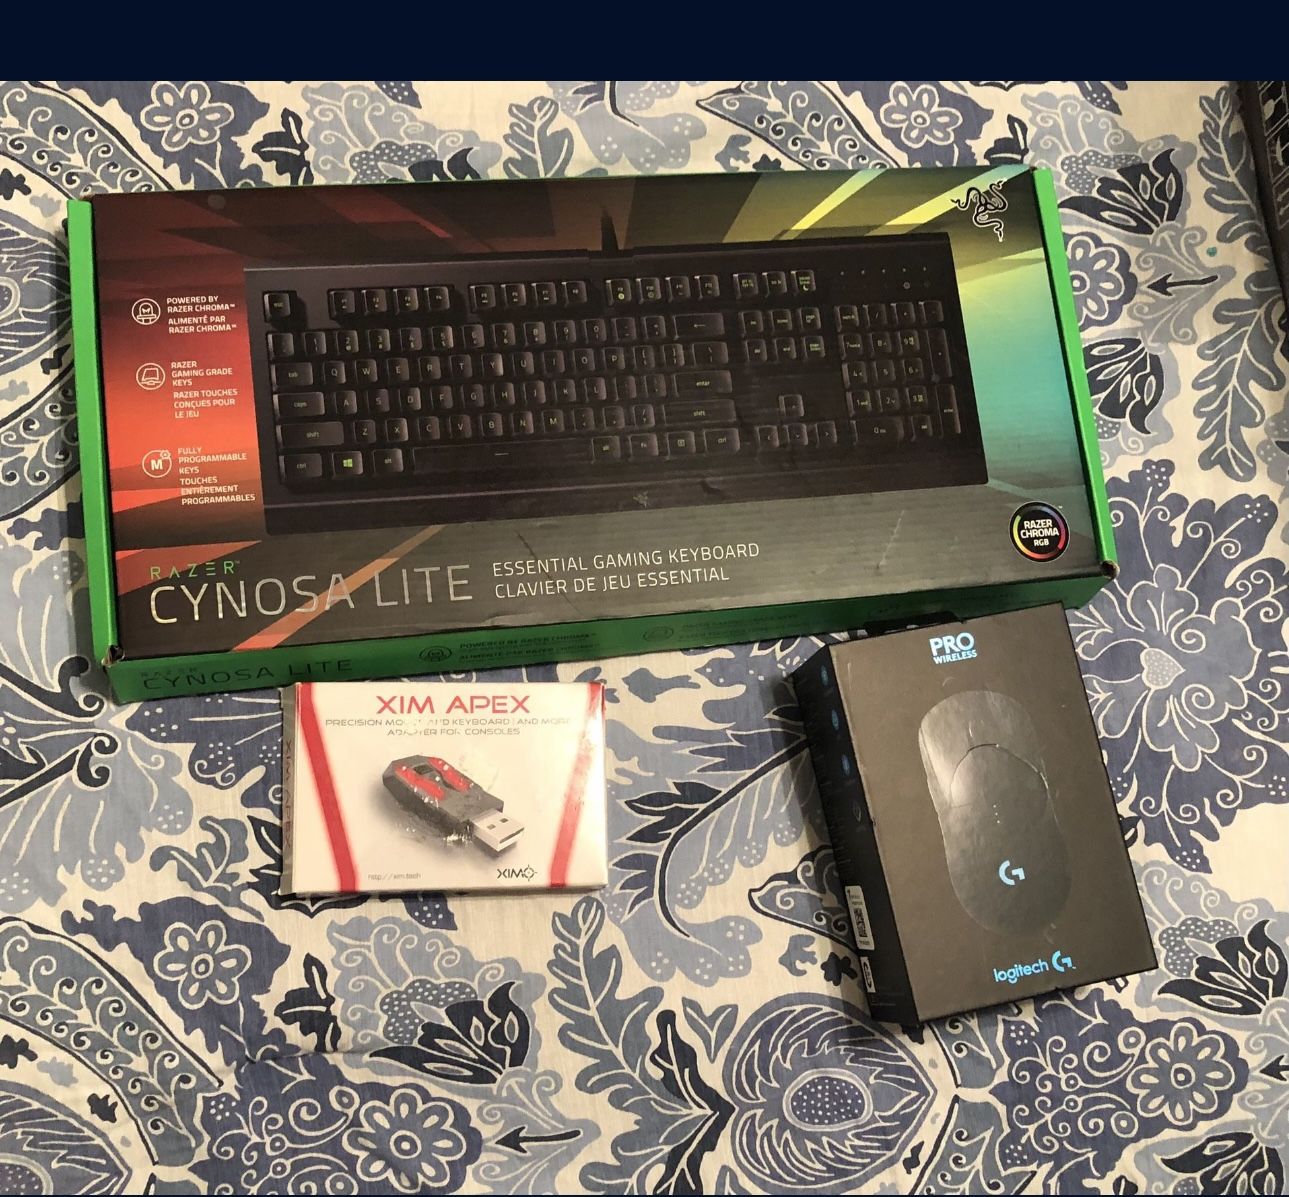 XIM apex , Logitech G Pro Mouse , And Razer Keyboard 